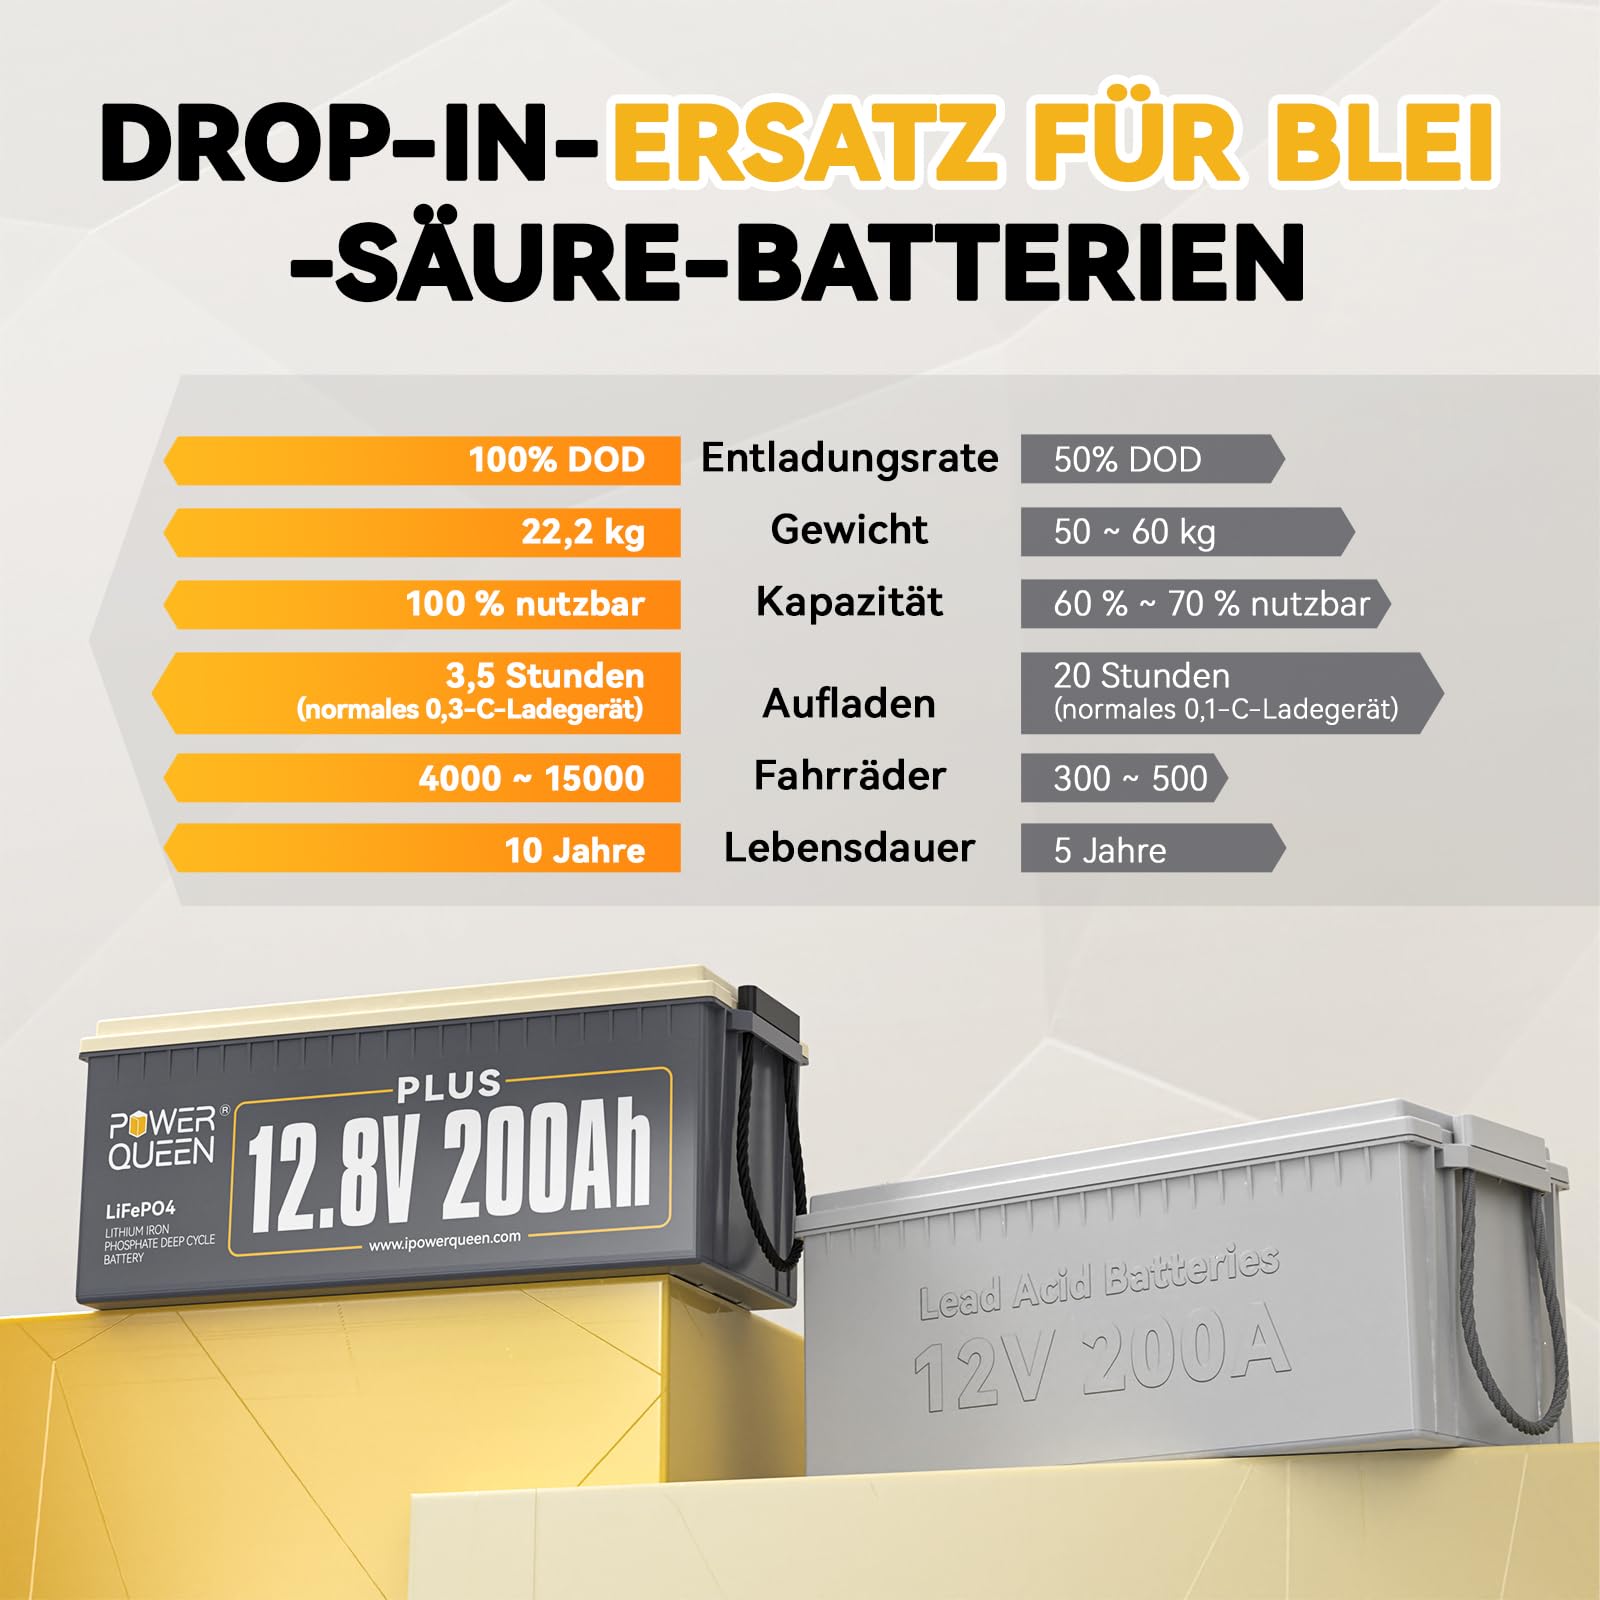 【0% Mwst.】Power Queen 12V 200Ah Plus LiFePO4 Batterie, Eingebautes 200A BMS